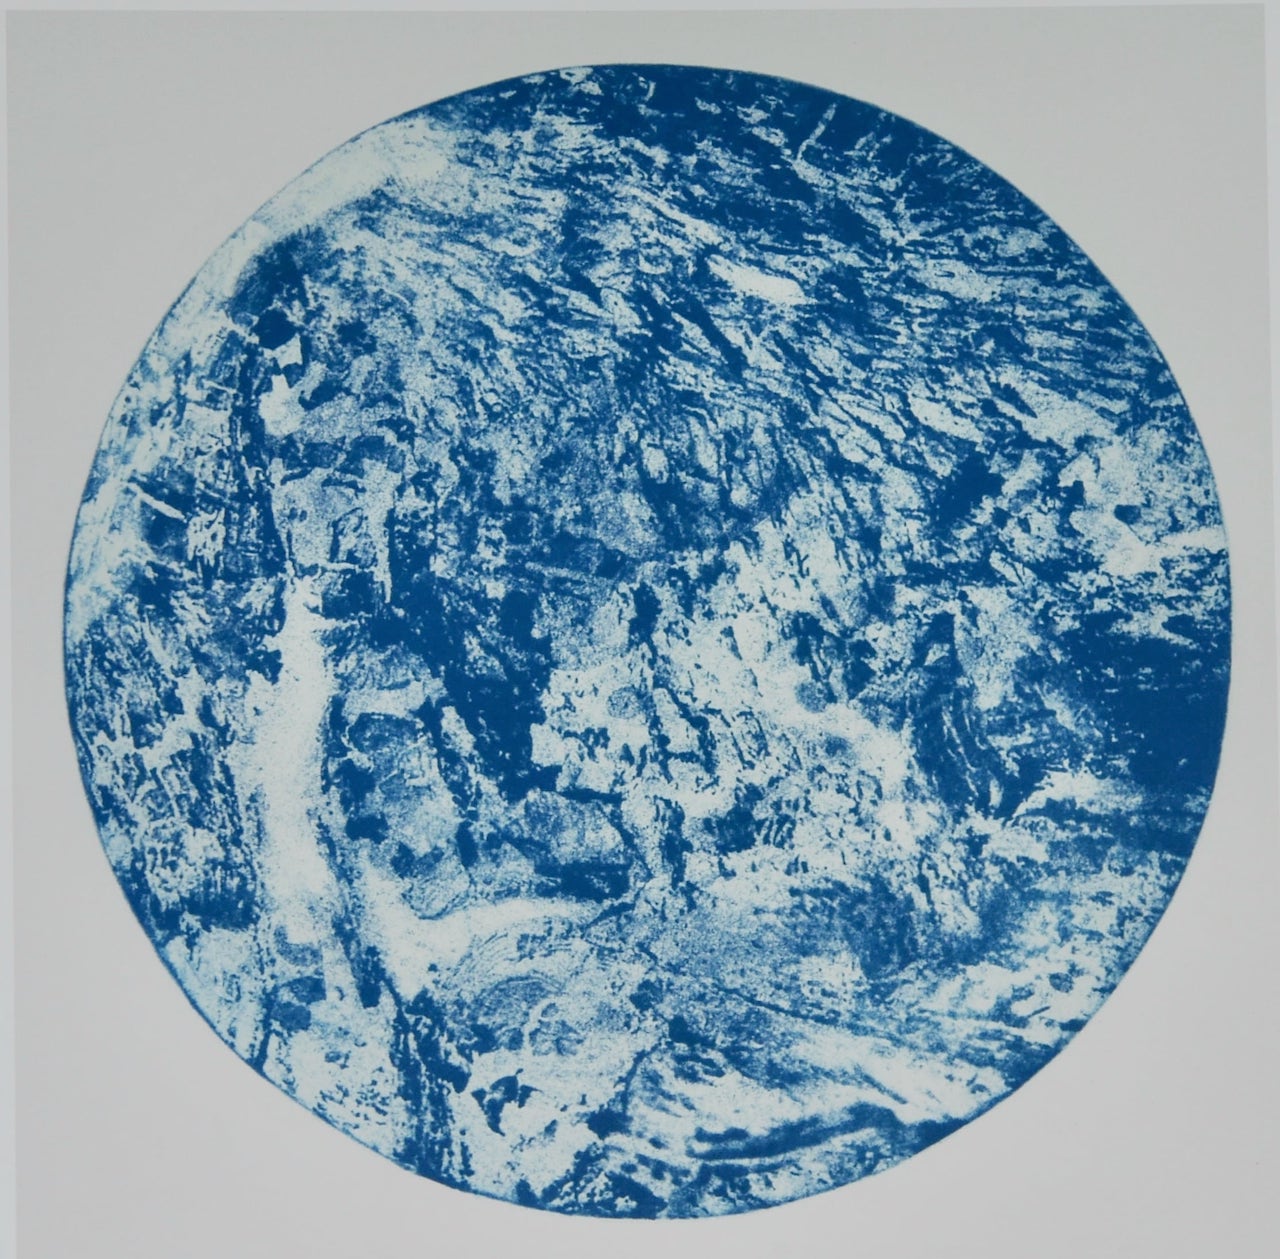 Blue Moon 2008 40 x 40 cm